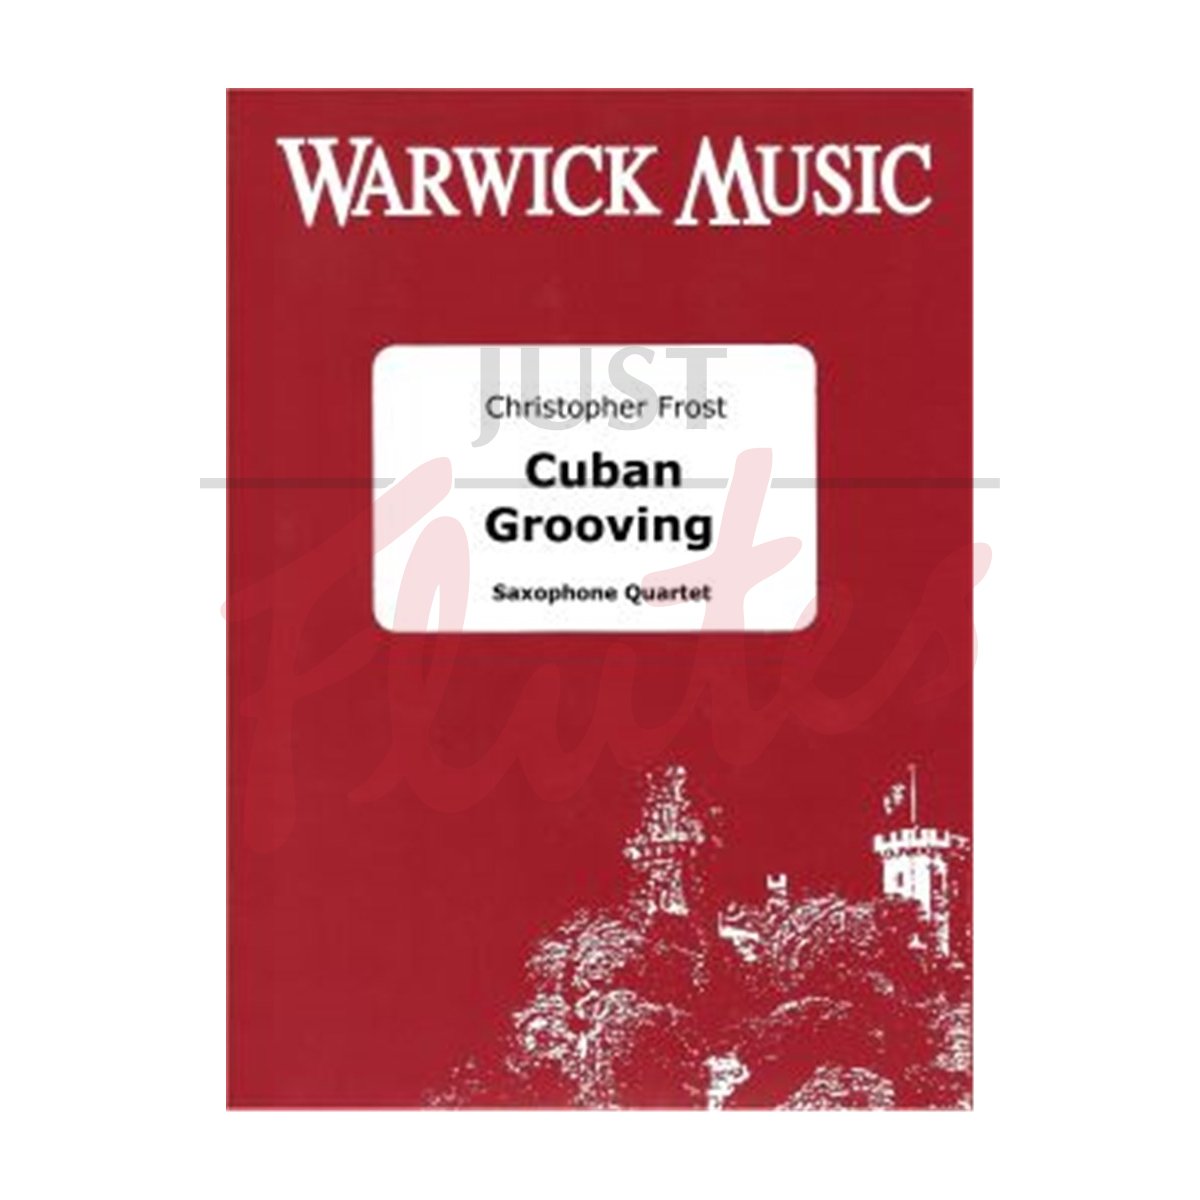 Cuban Grooving for Saxophone Quartet